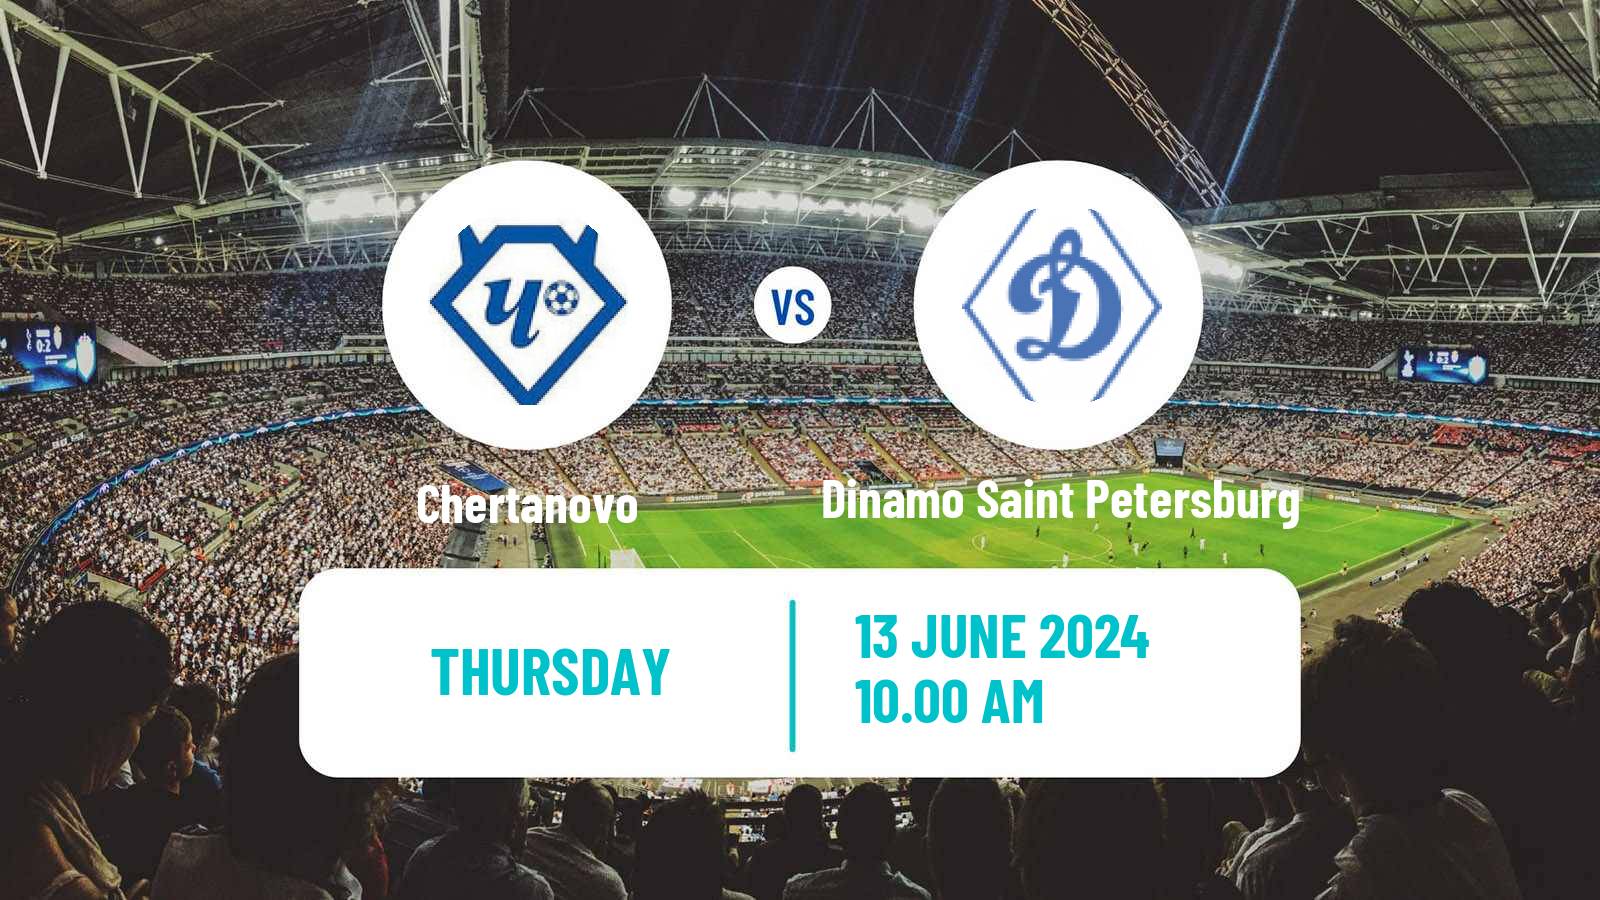 Soccer FNL 2 Division B Group 2 Chertanovo - Dinamo Saint Petersburg